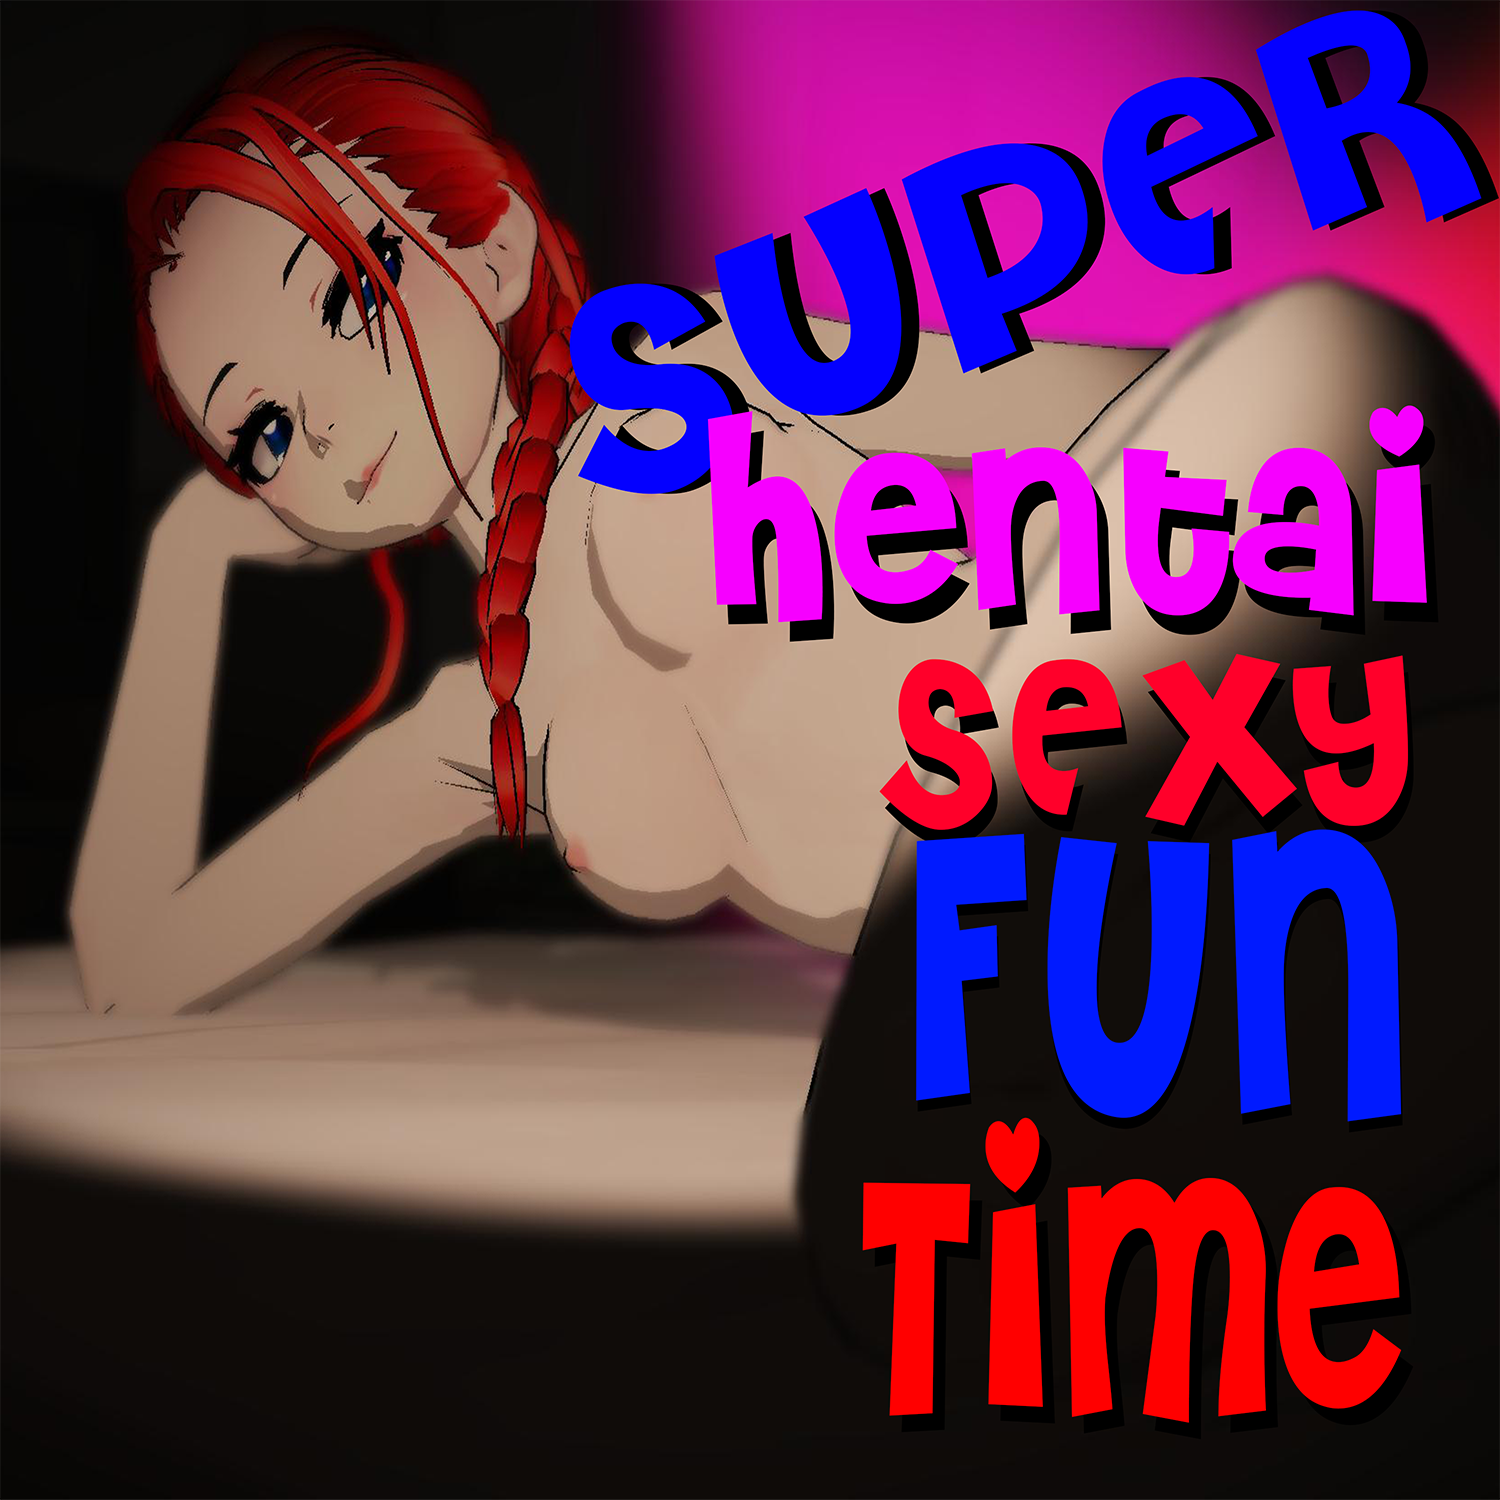 Super hentai game